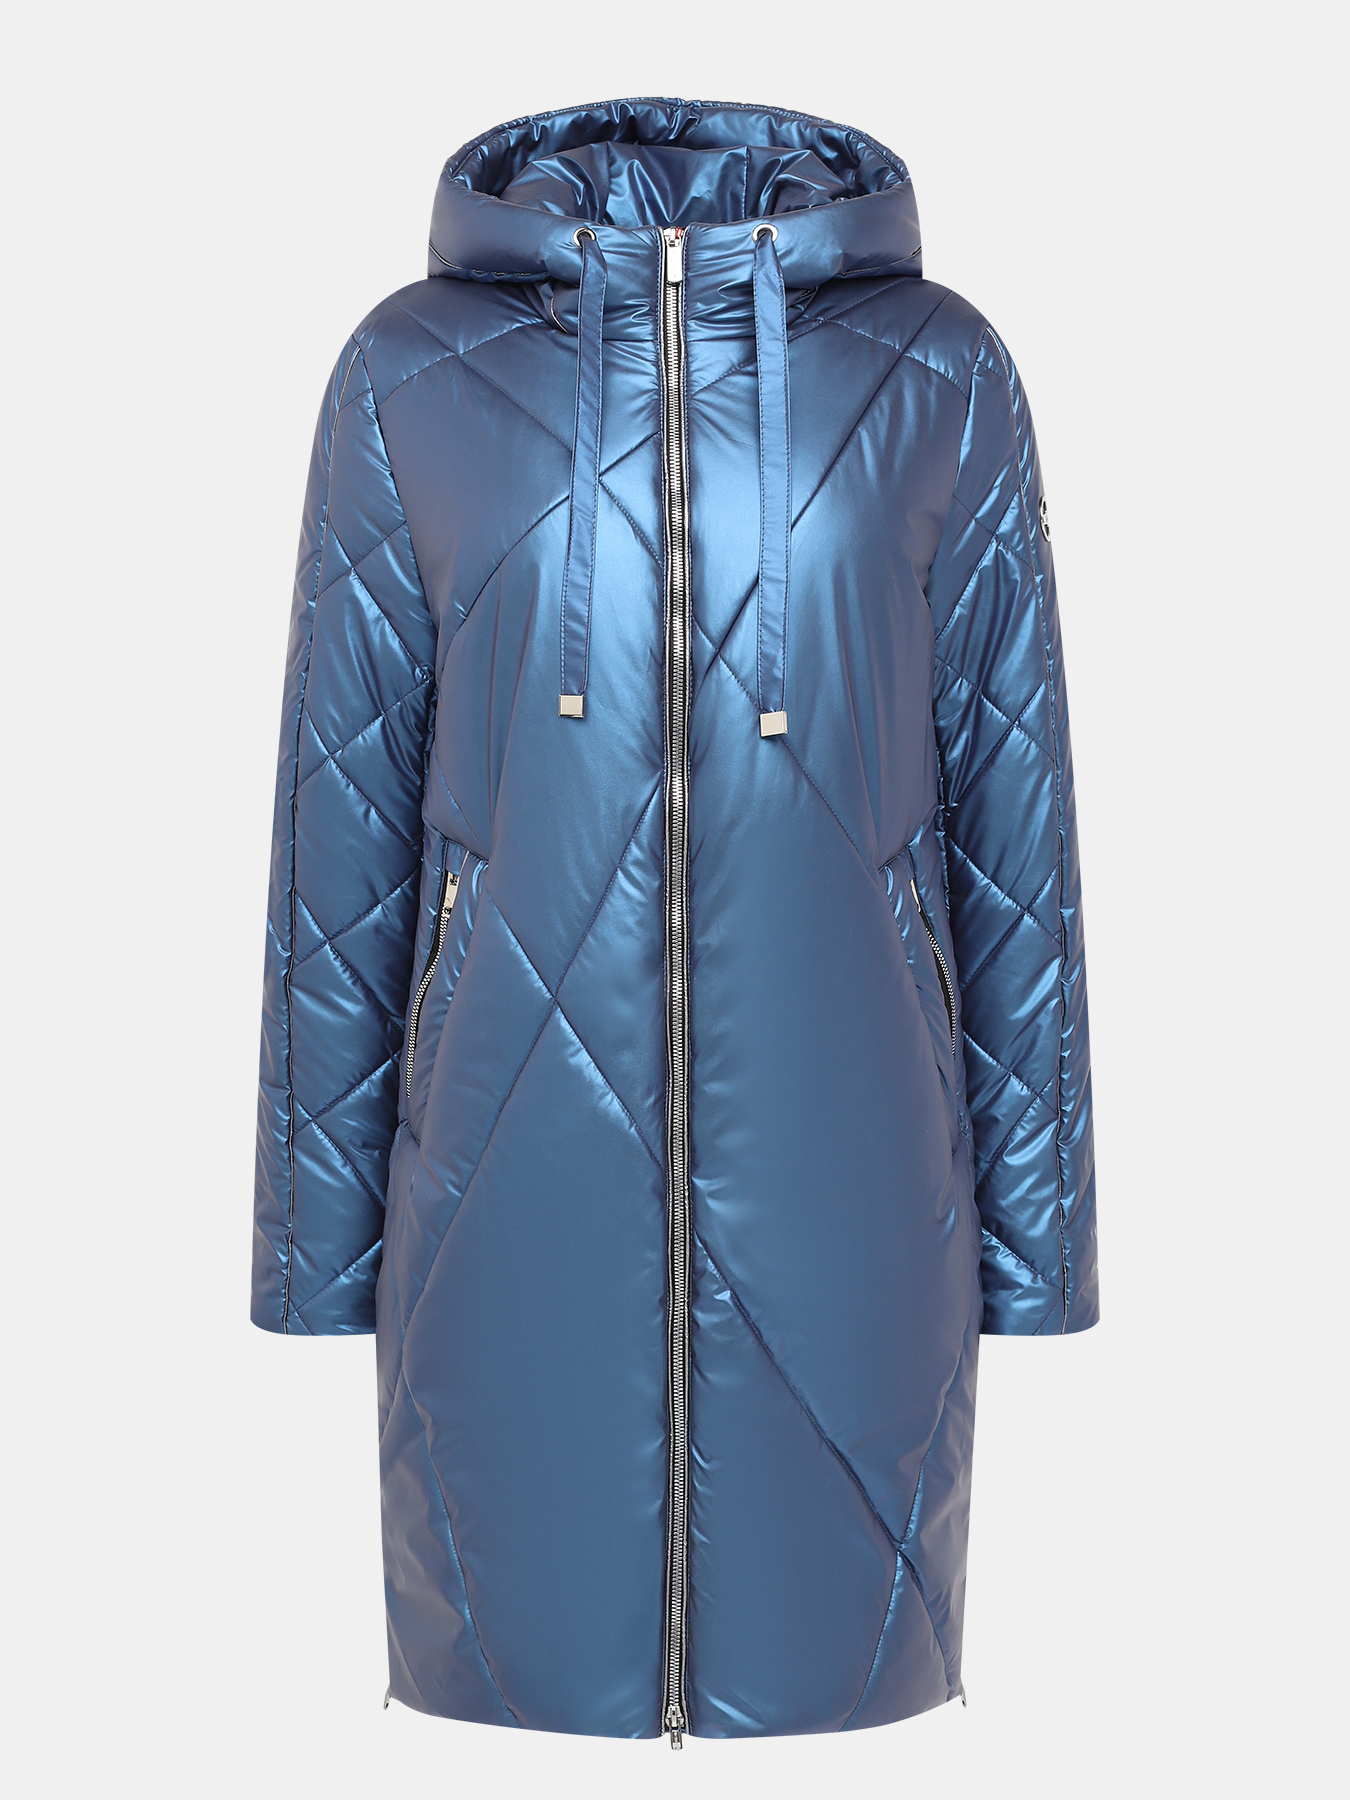 Пальто зимнее Maritta 433572-021, цвет синий, размер 46 - фото 1